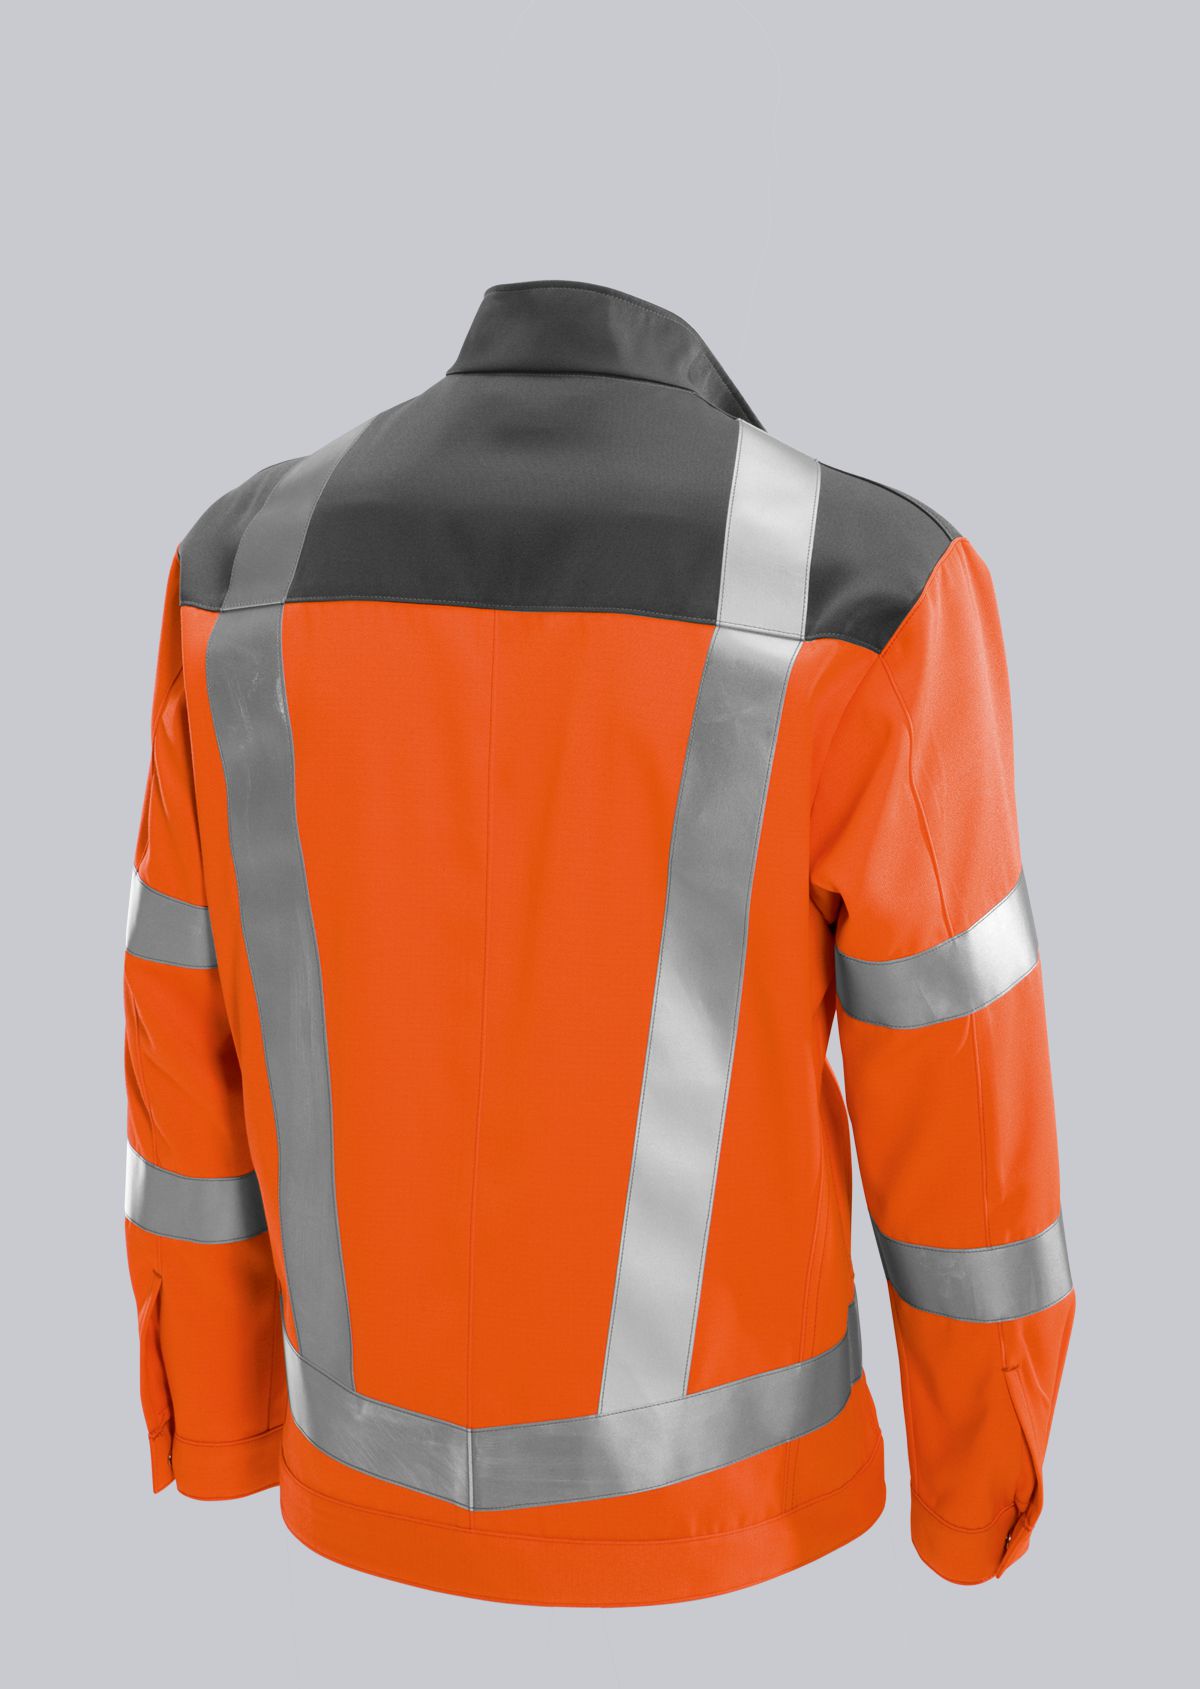 BP® Multi-standard high visibility APC1 jacket